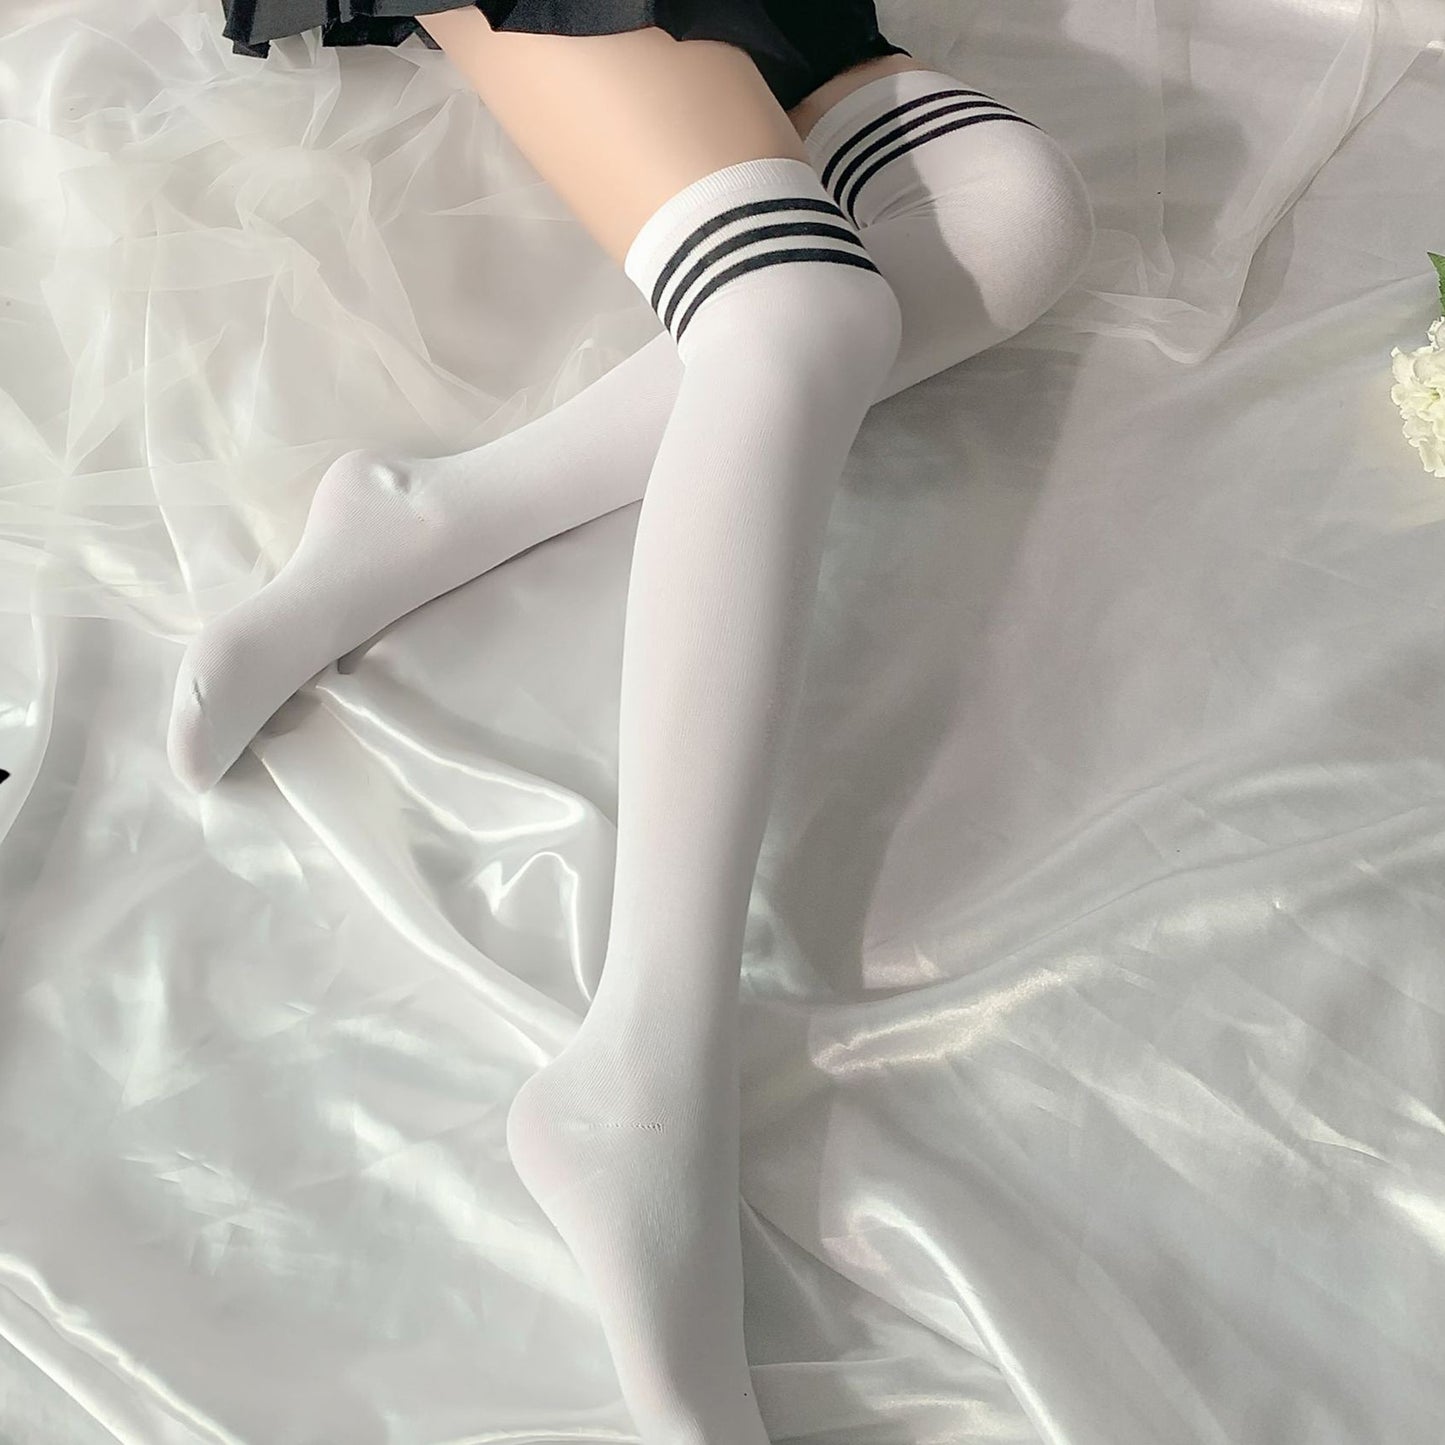 Black Striped White Thigh High Stockings - Femboy Fashion